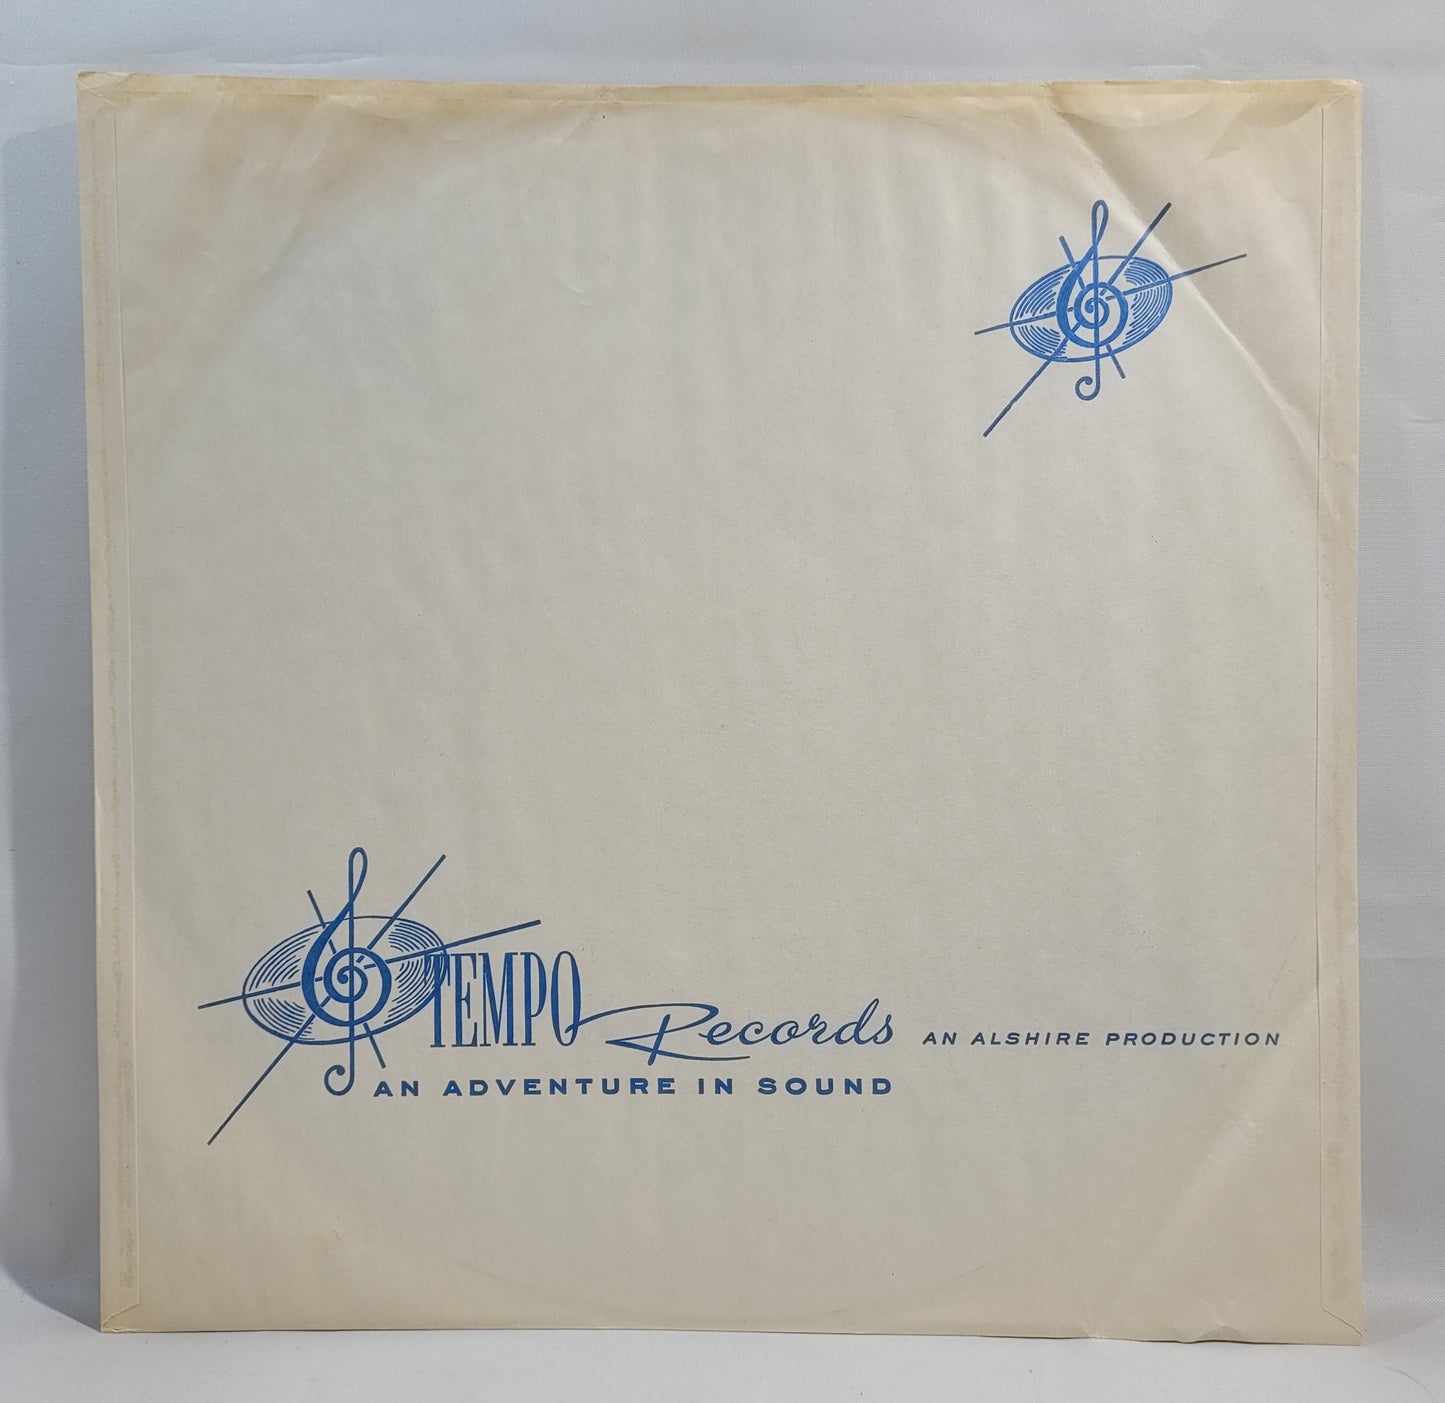 Strings Unlimited - Innamorati [Vinyl Record LP]